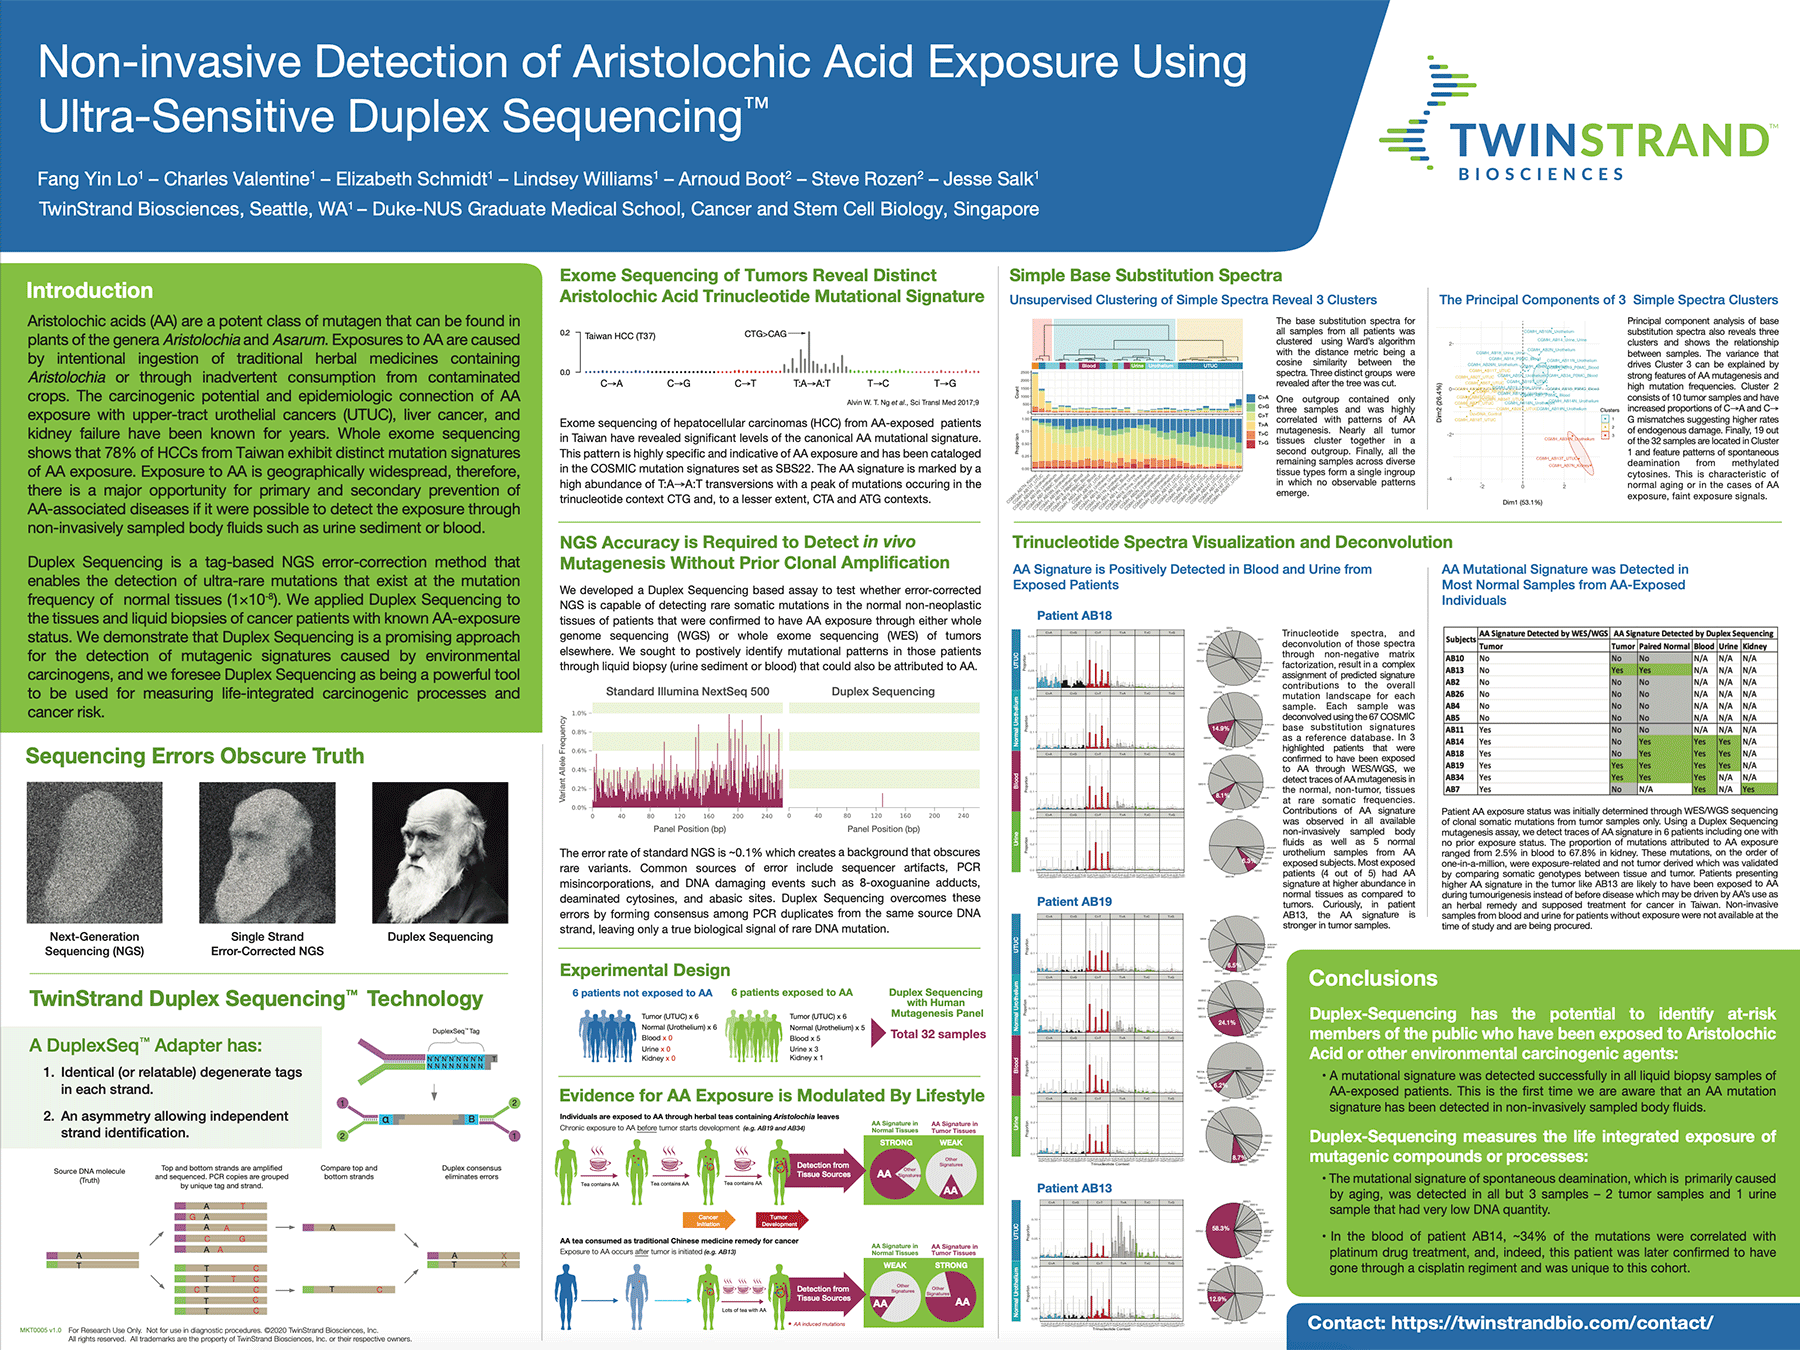 Non-invasive Detection of Aristolochic Acid Exposure Using Ultra-Sensitive Duplex Sequencing